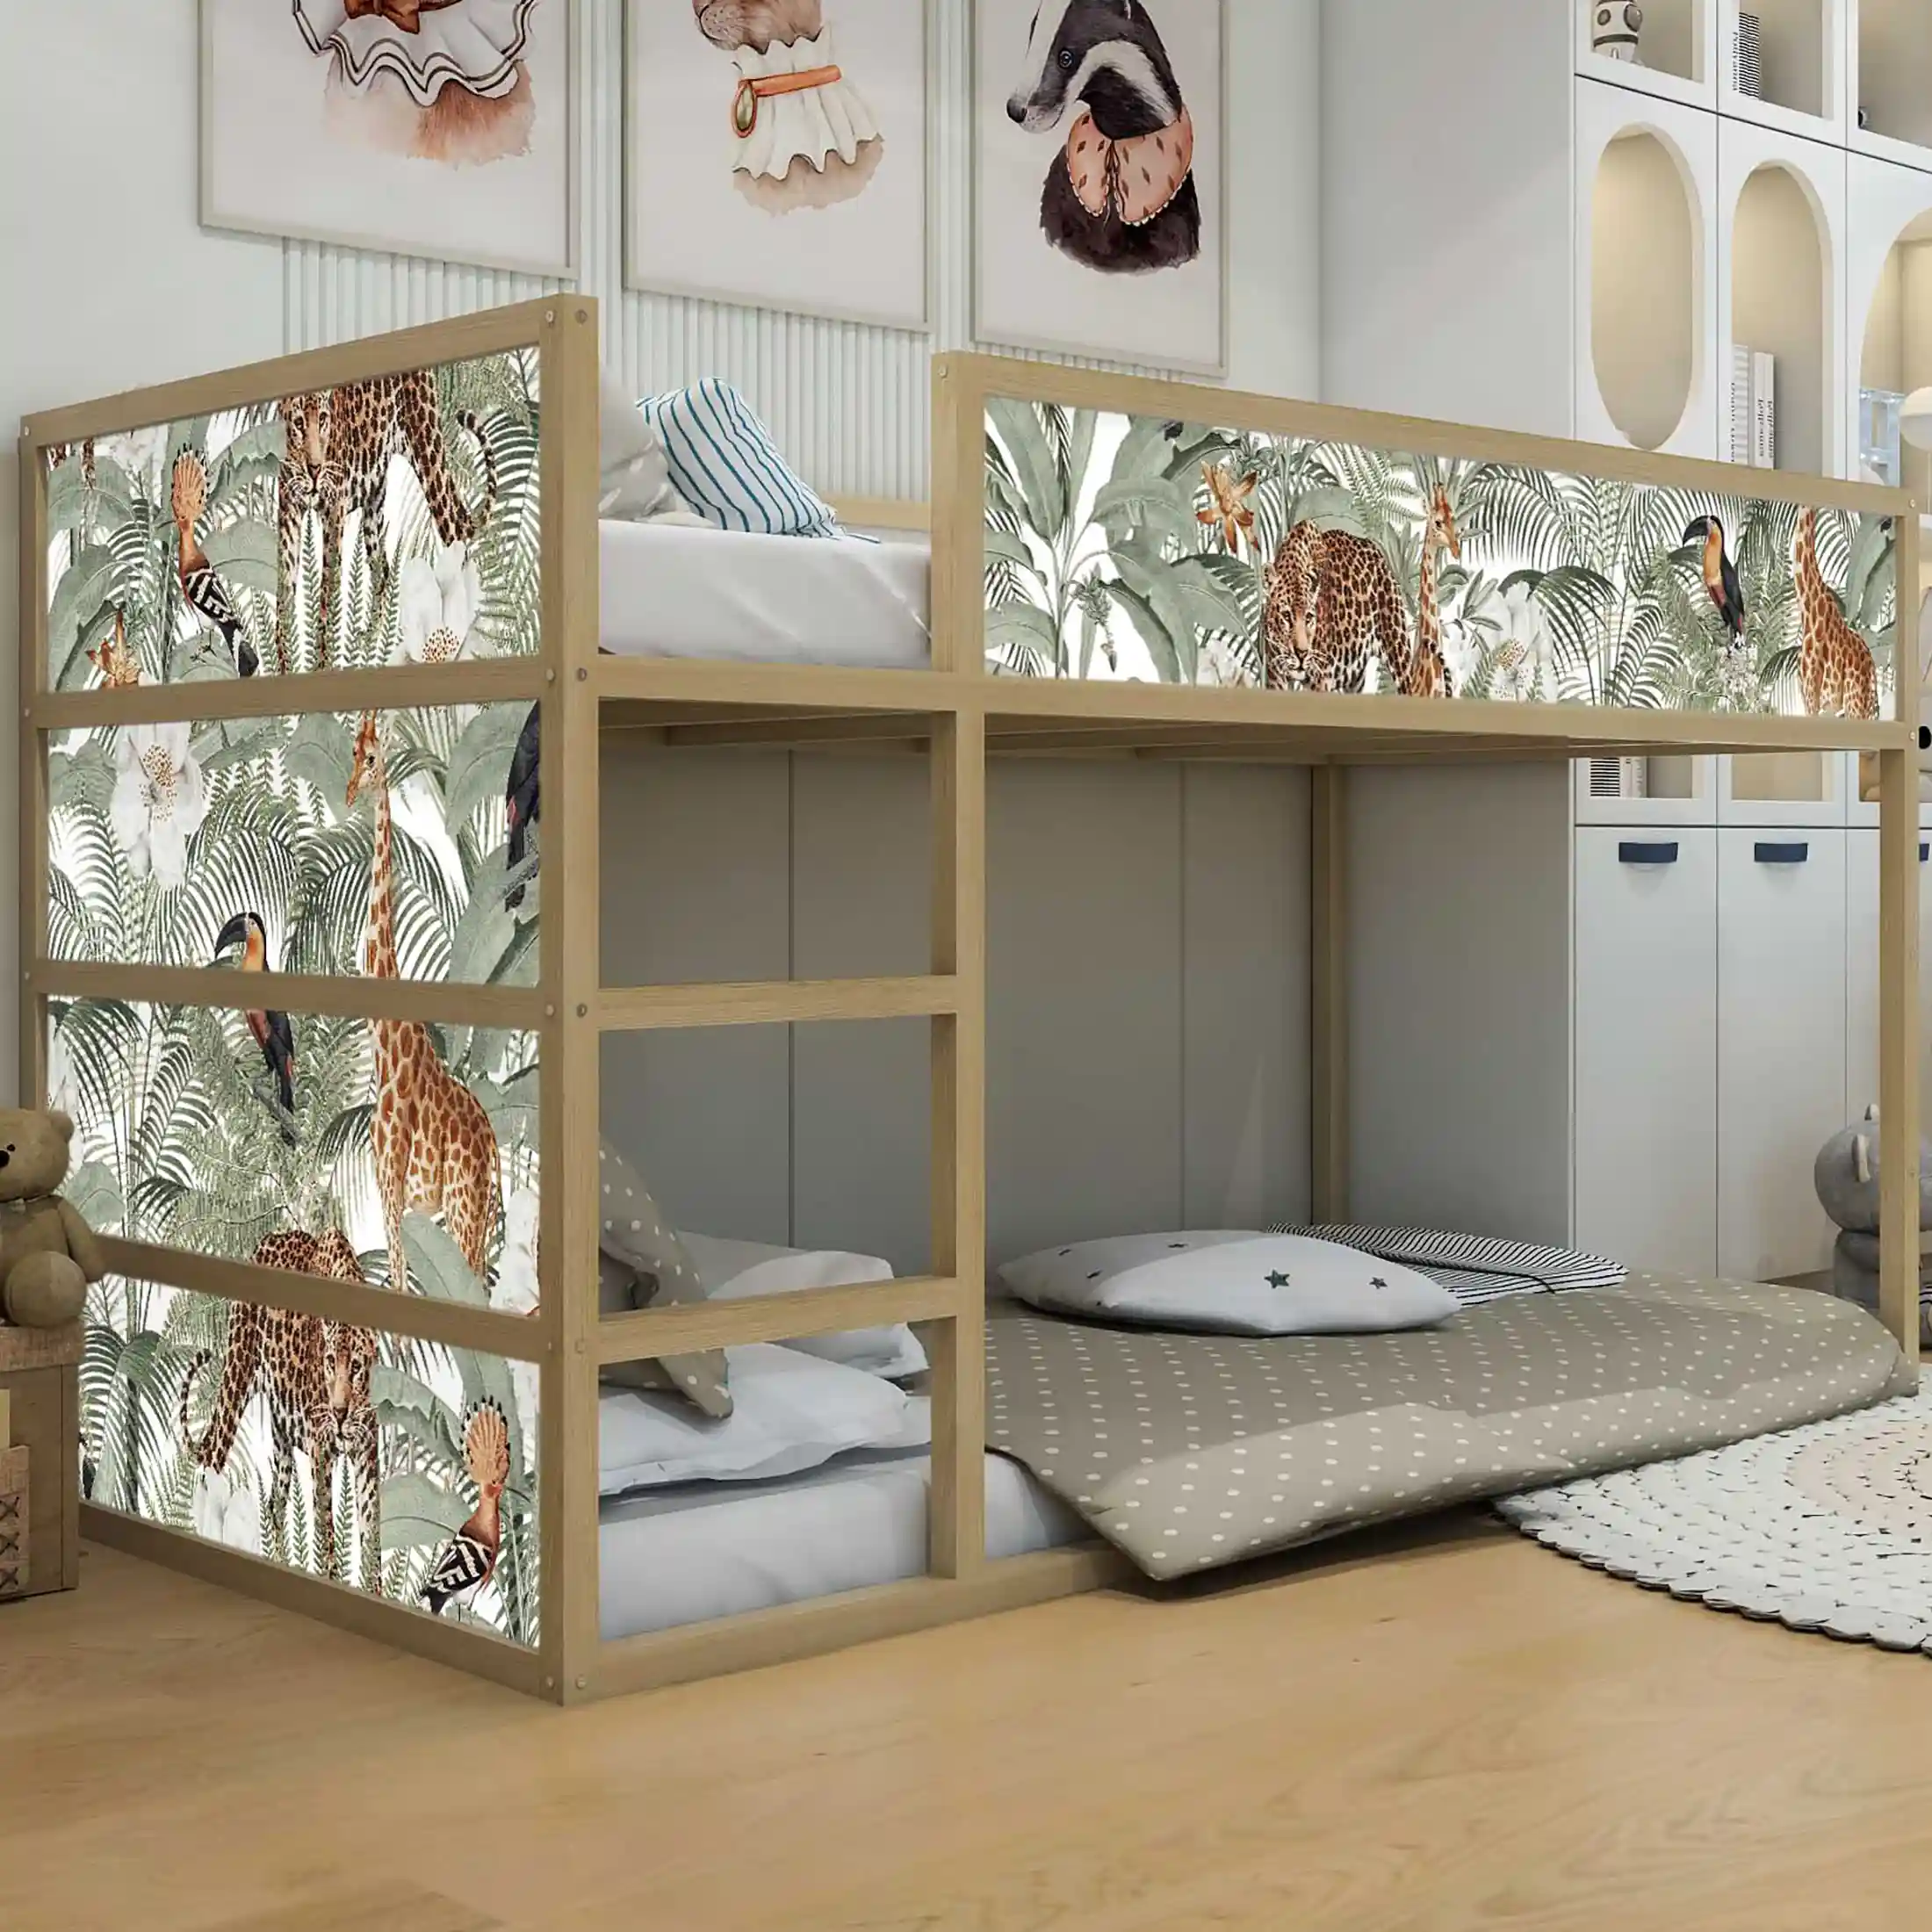 Aufkleber für IKEA KURA Kinderbett Dschungel